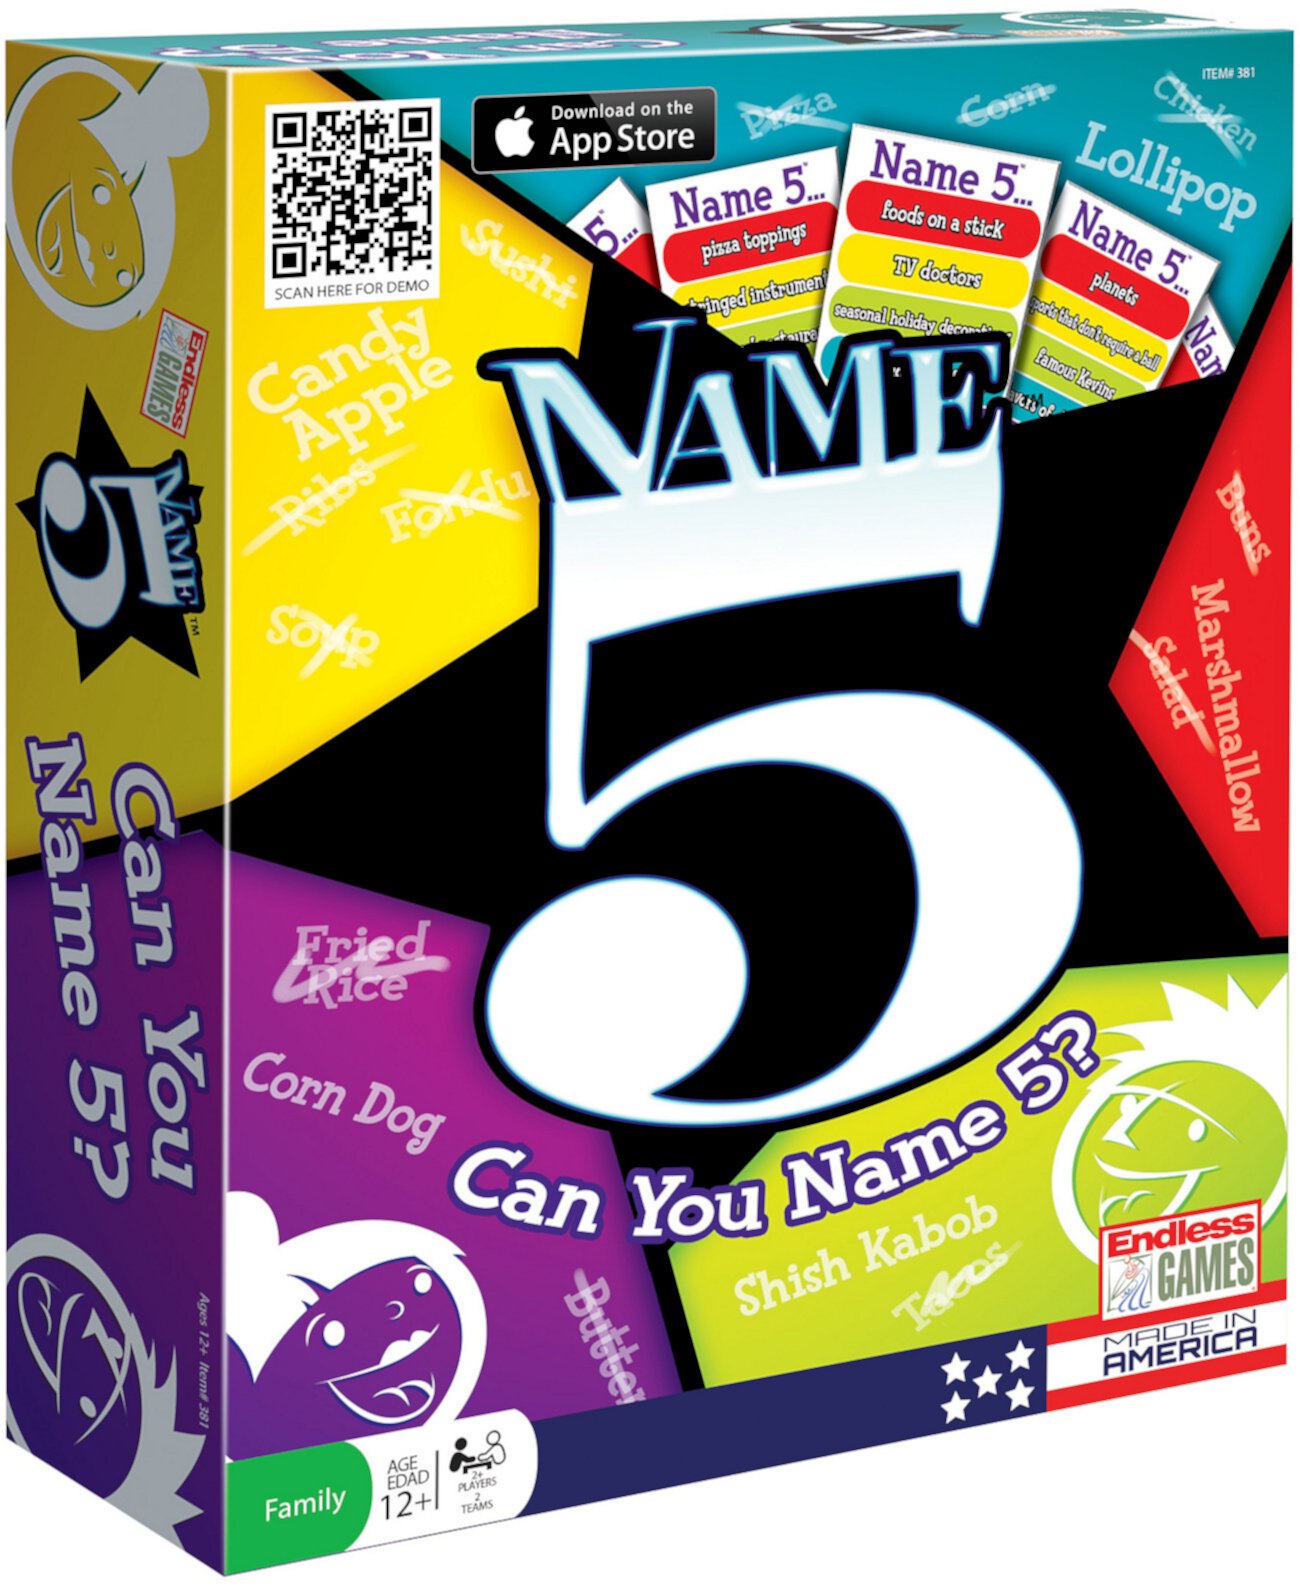 Name Five game. Name 5 game. Name 5 things Board game. Name 5 game Cards. Настольная игра 5 в одном